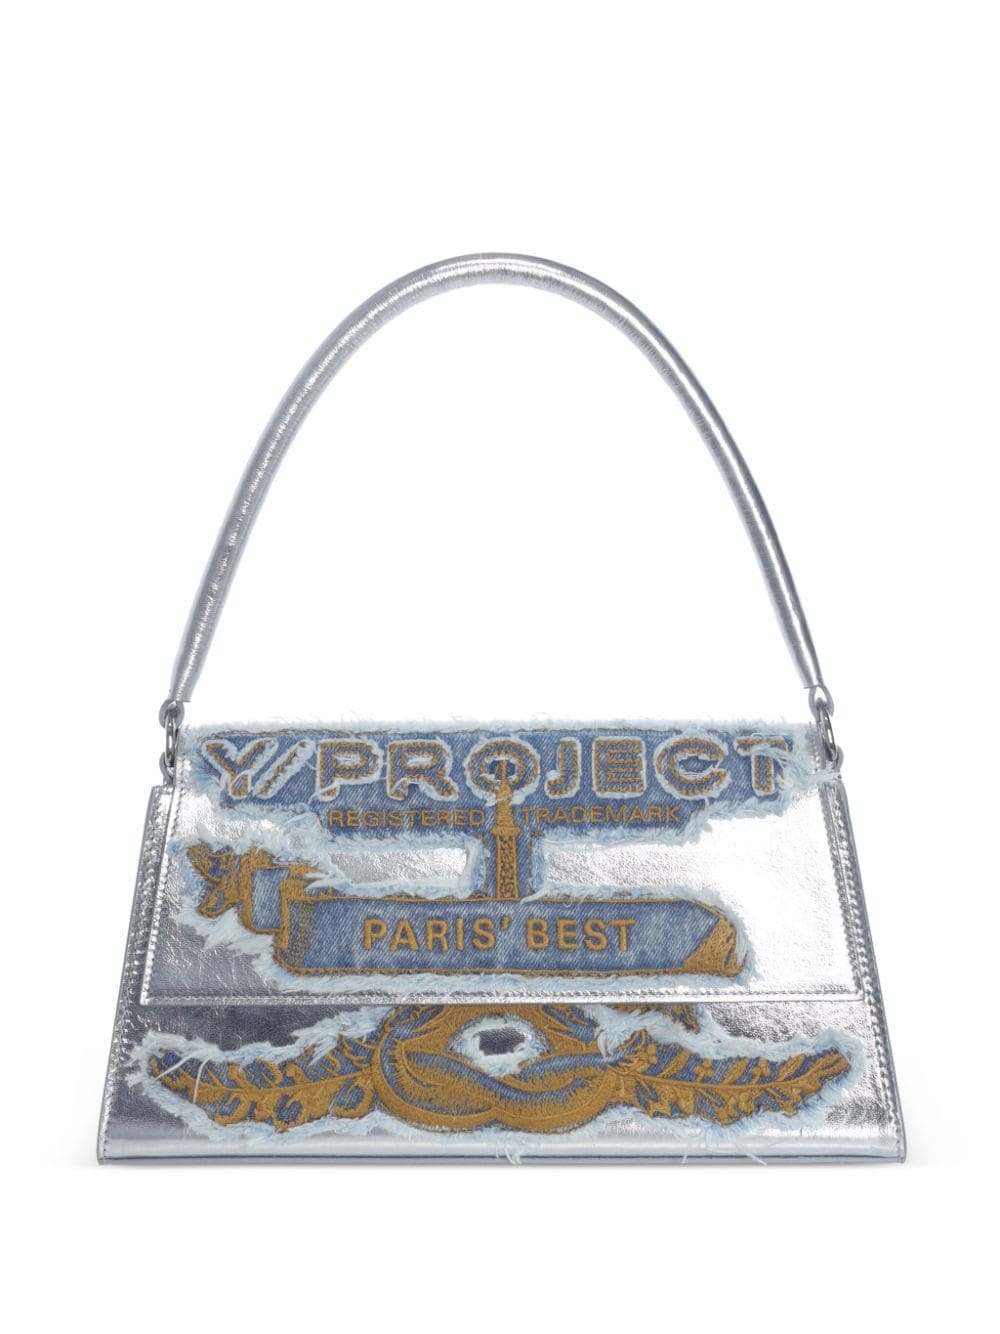 Paris' Best metallic shoulder bag